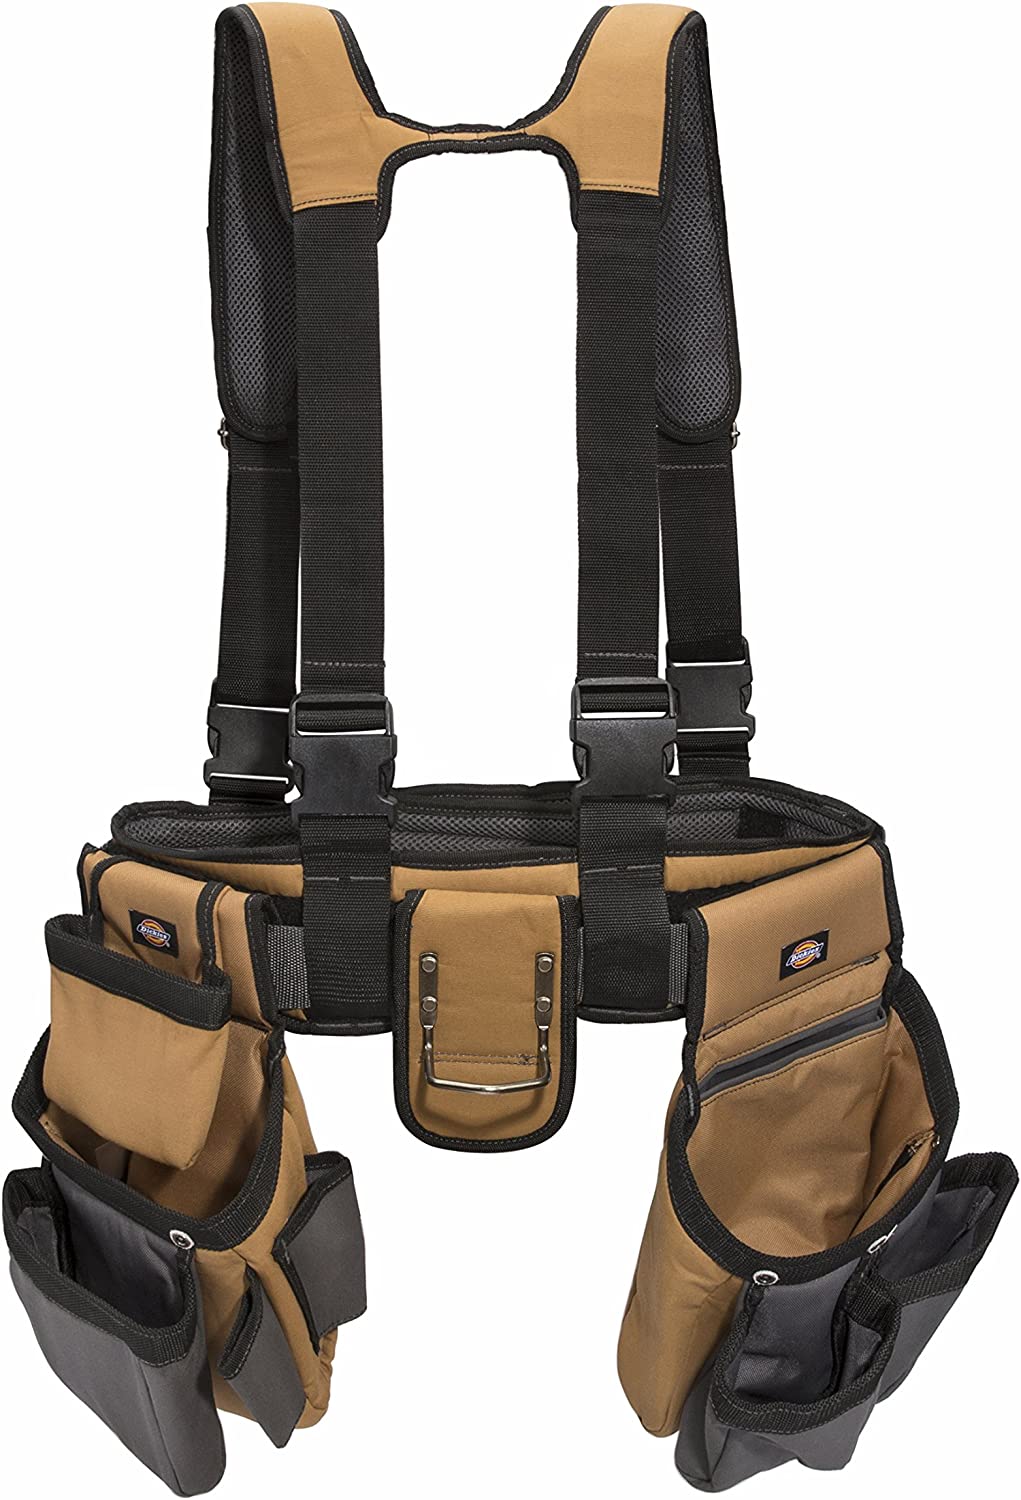 beige and black tool belt with shoulder support harness 